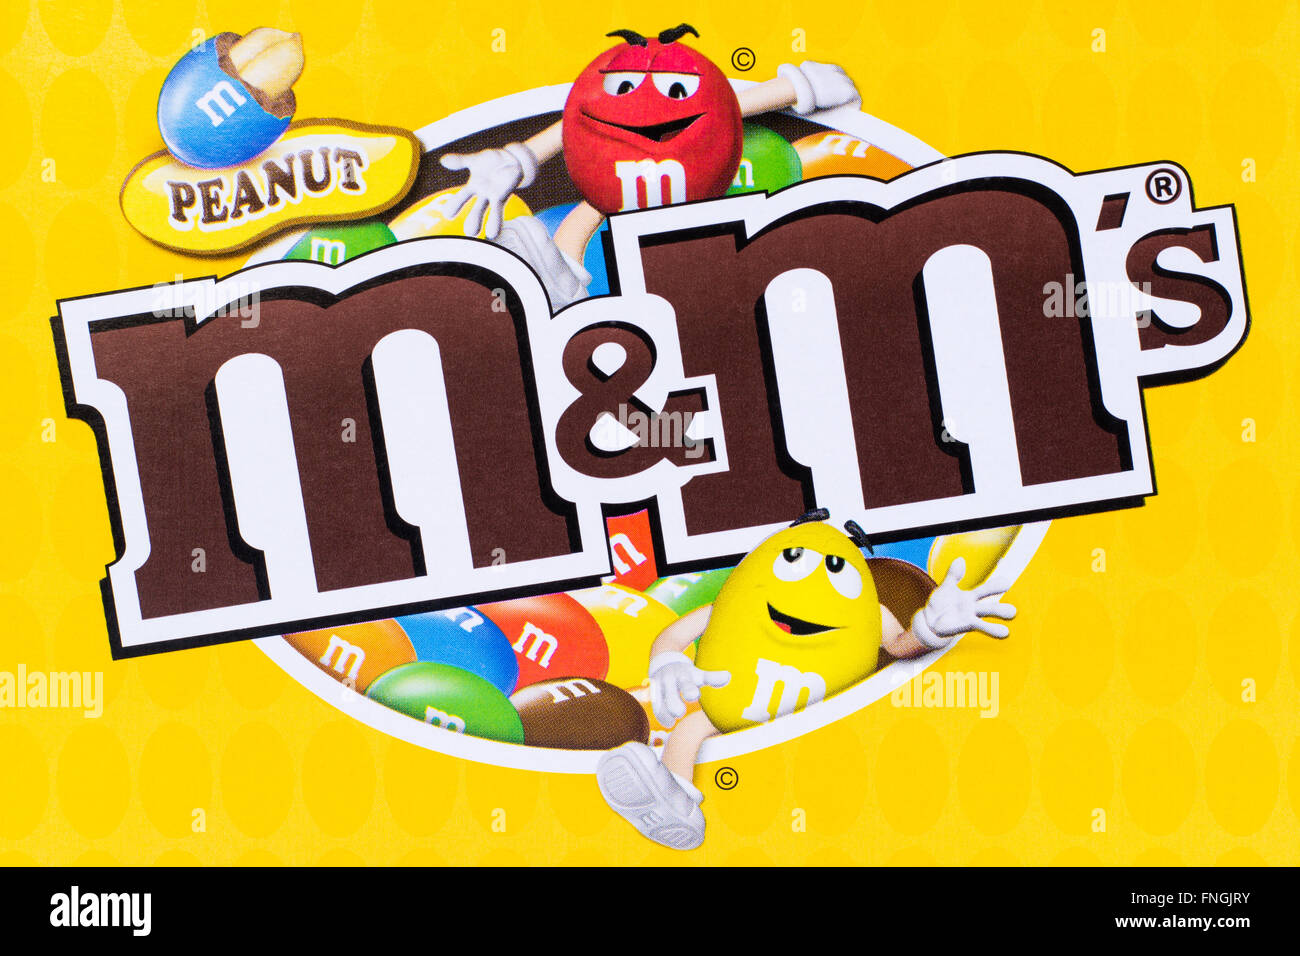 Peanut M&M's logo printed on cardboard. Stock Photo